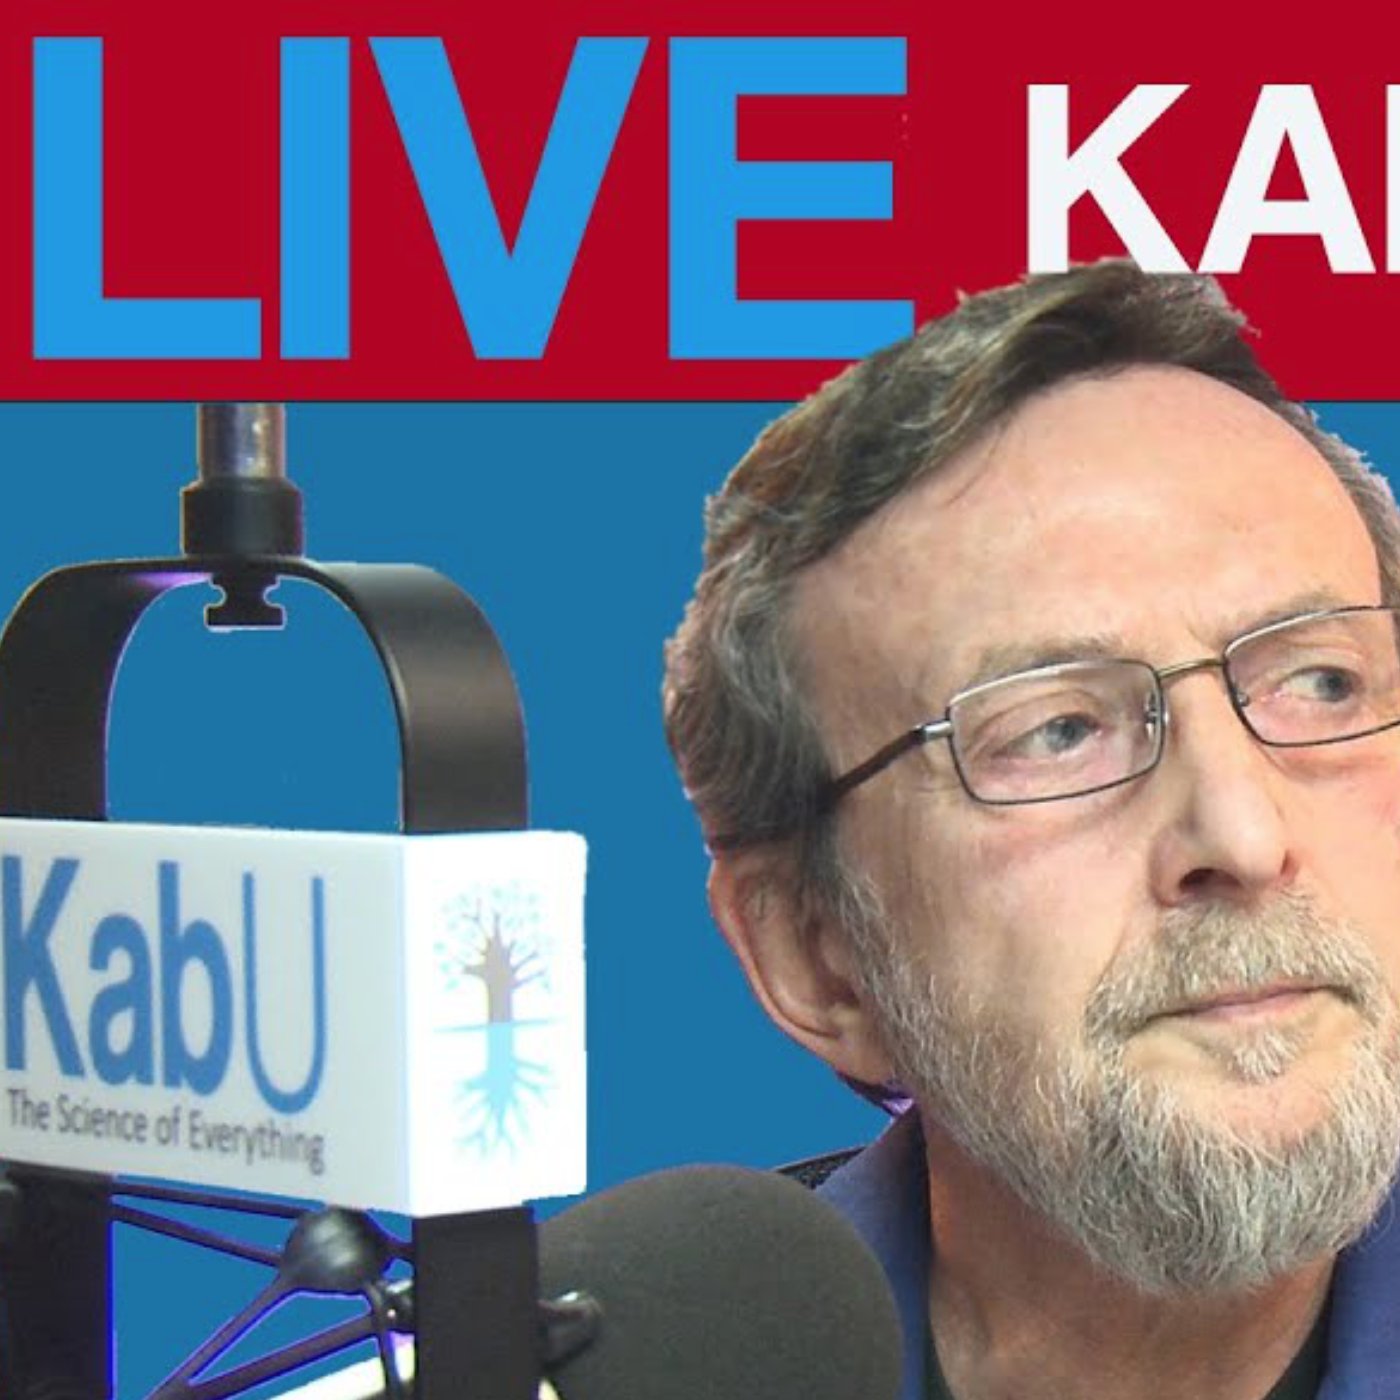 Kabbalah Explained Simply - Live Q&A with Tony Kosinec